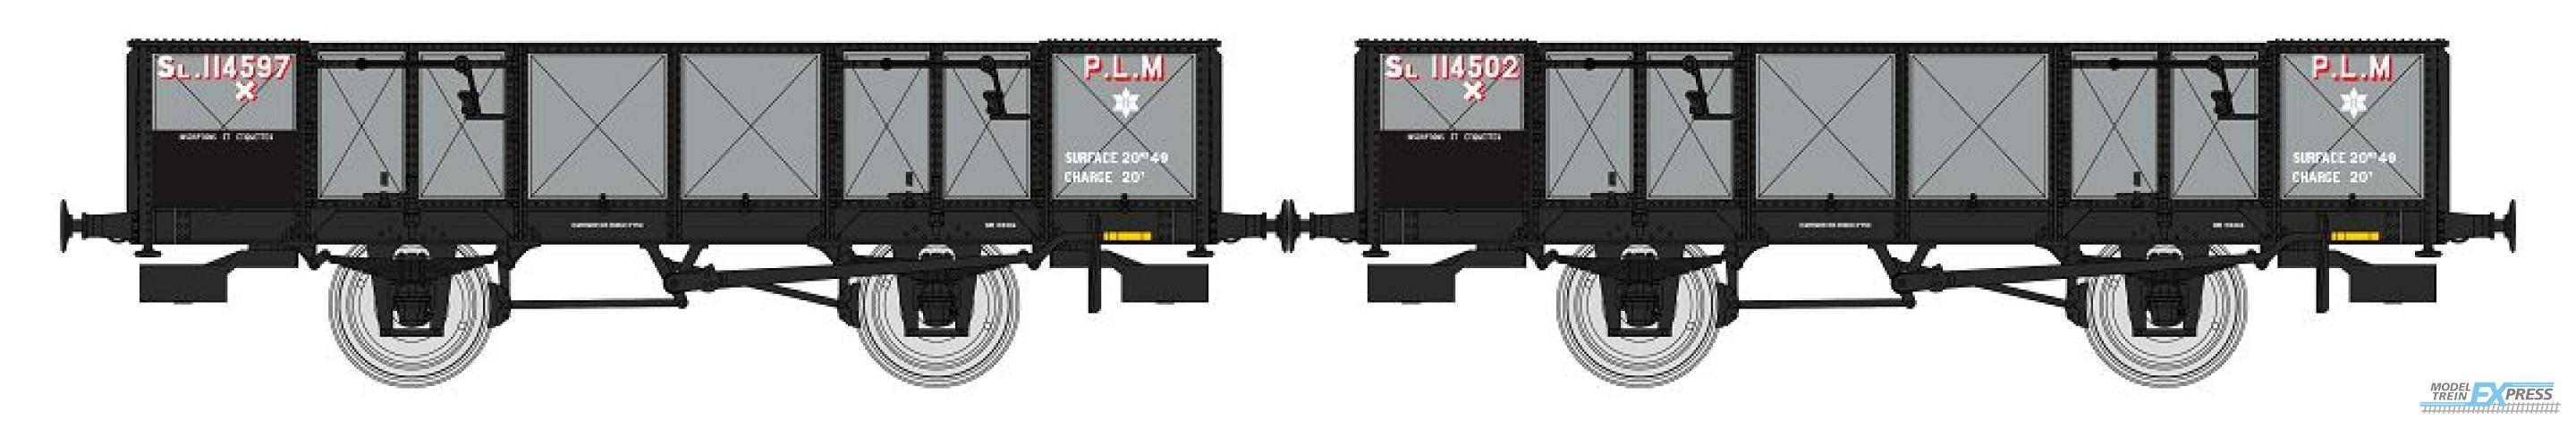 REE models WB-812 Set of 2 PLM Gondola 4 doors, steel, grey, SL 114597 et SL 114502 PLM Era II